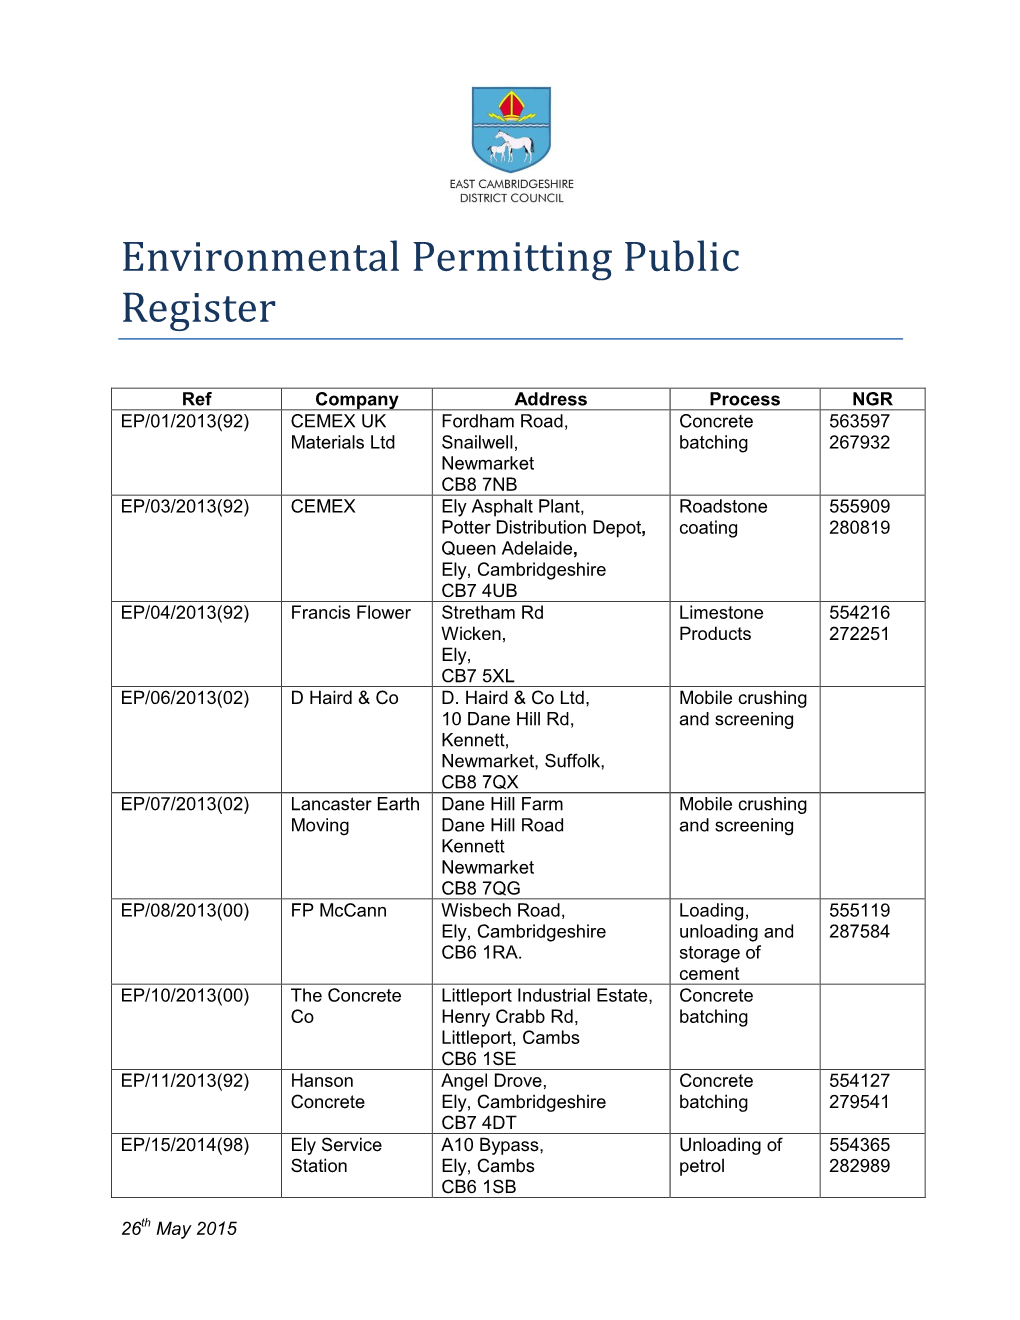 Environmental Permitting Public Register